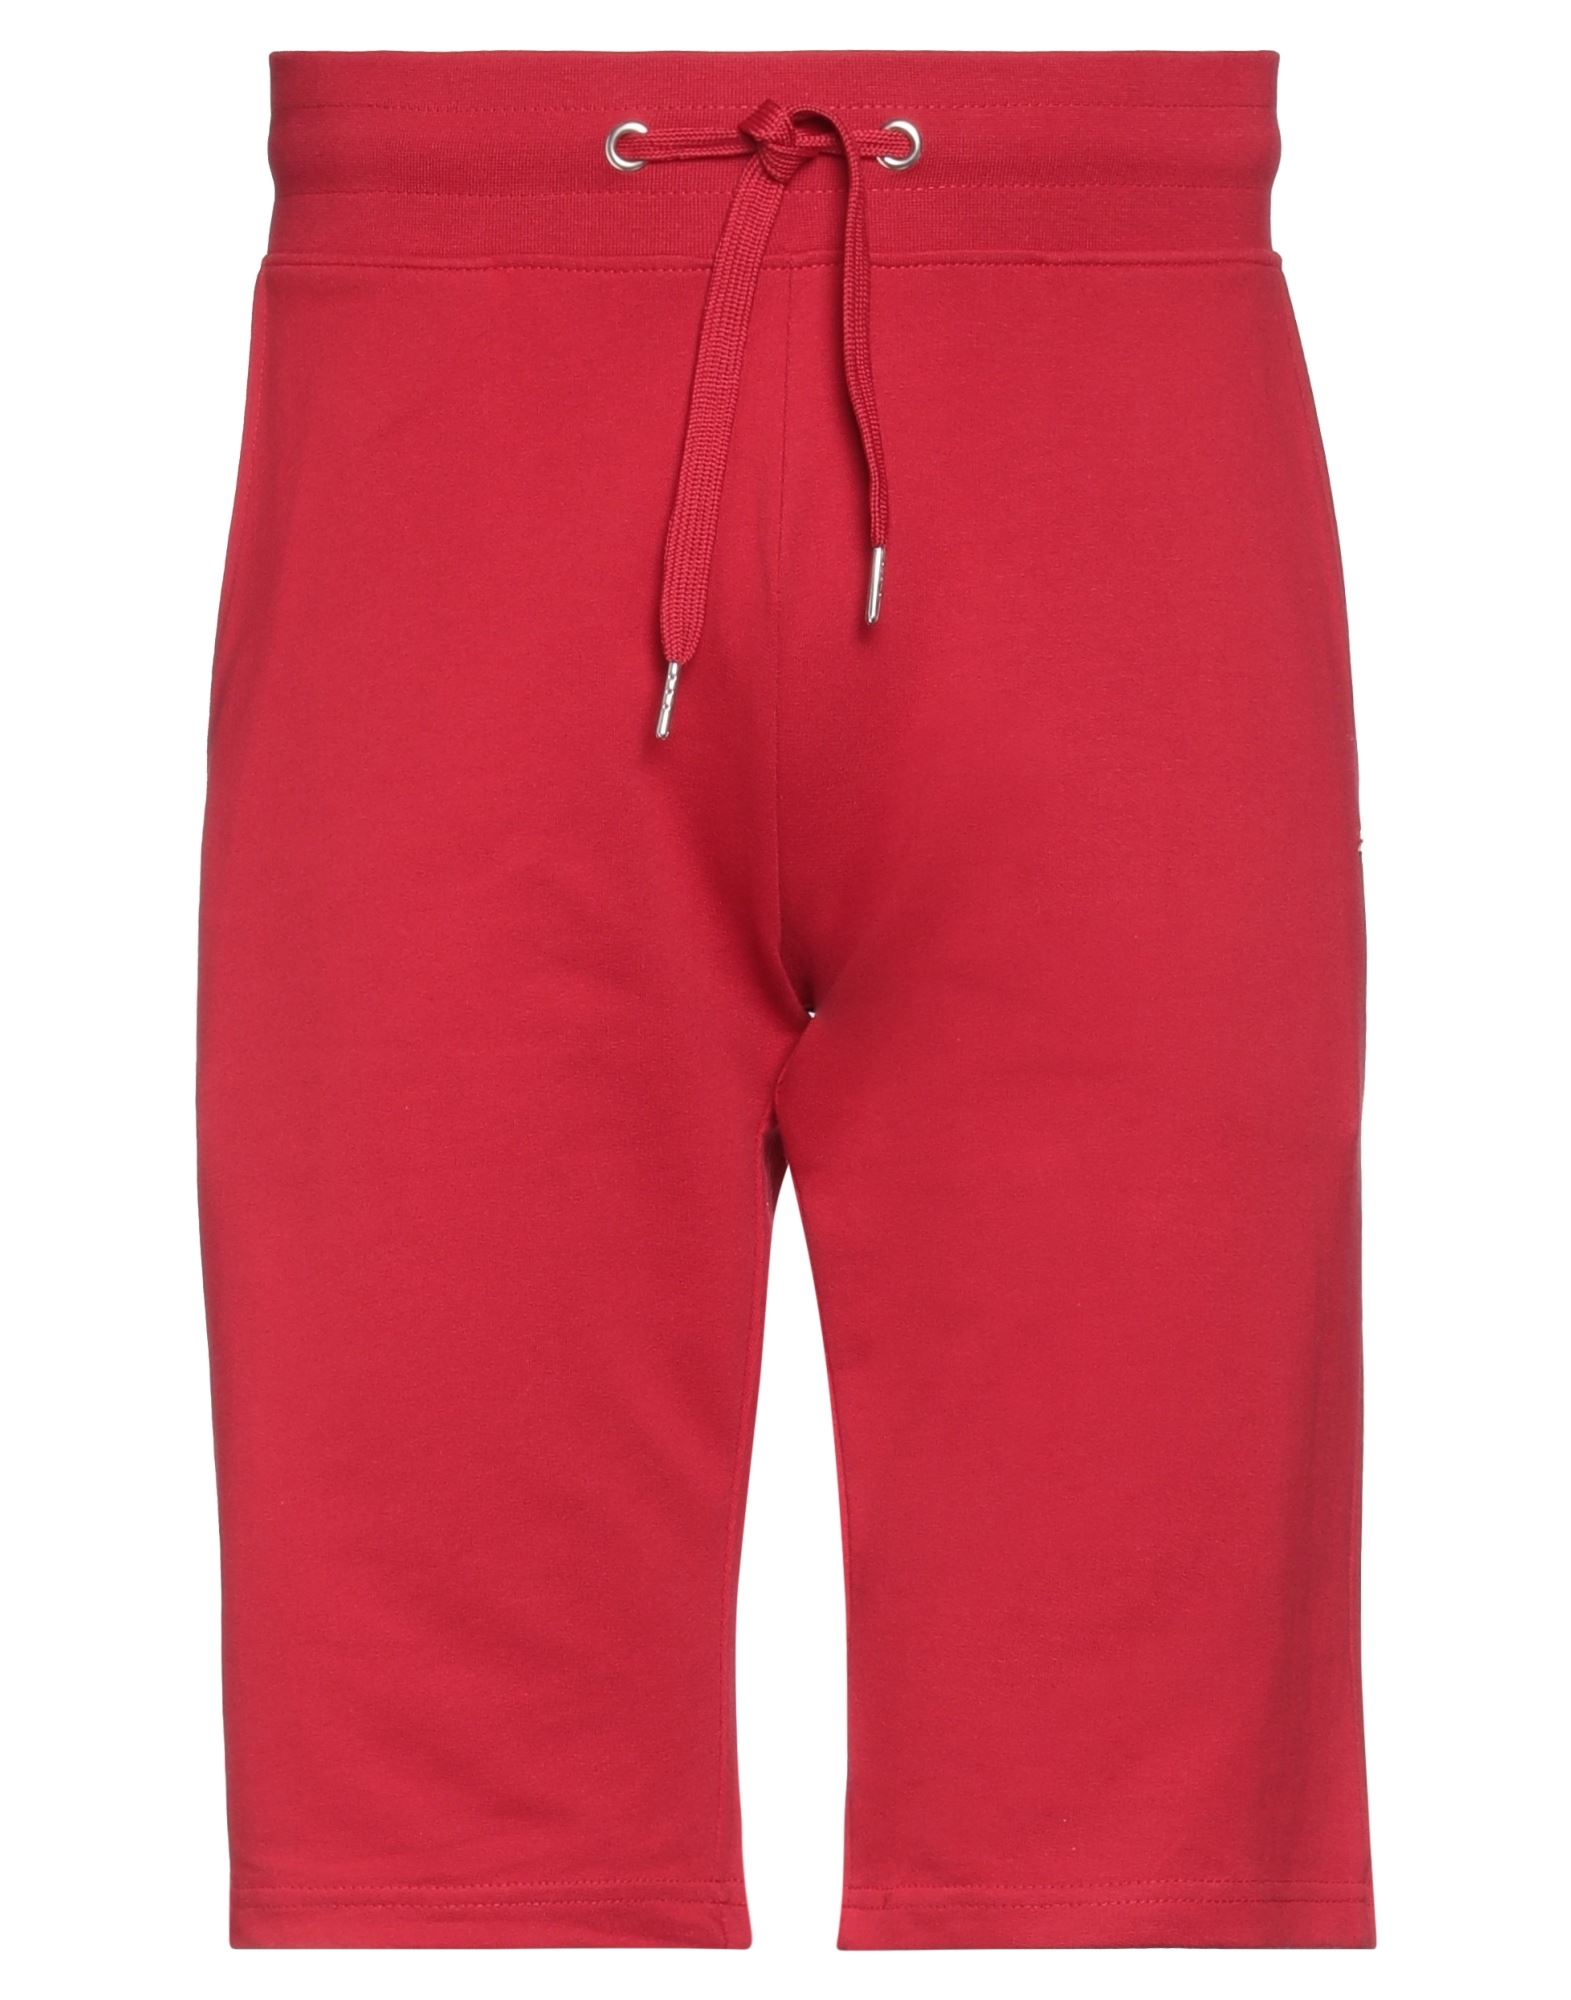 Markup Man Shorts & Bermuda Shorts Red Size L Cotton